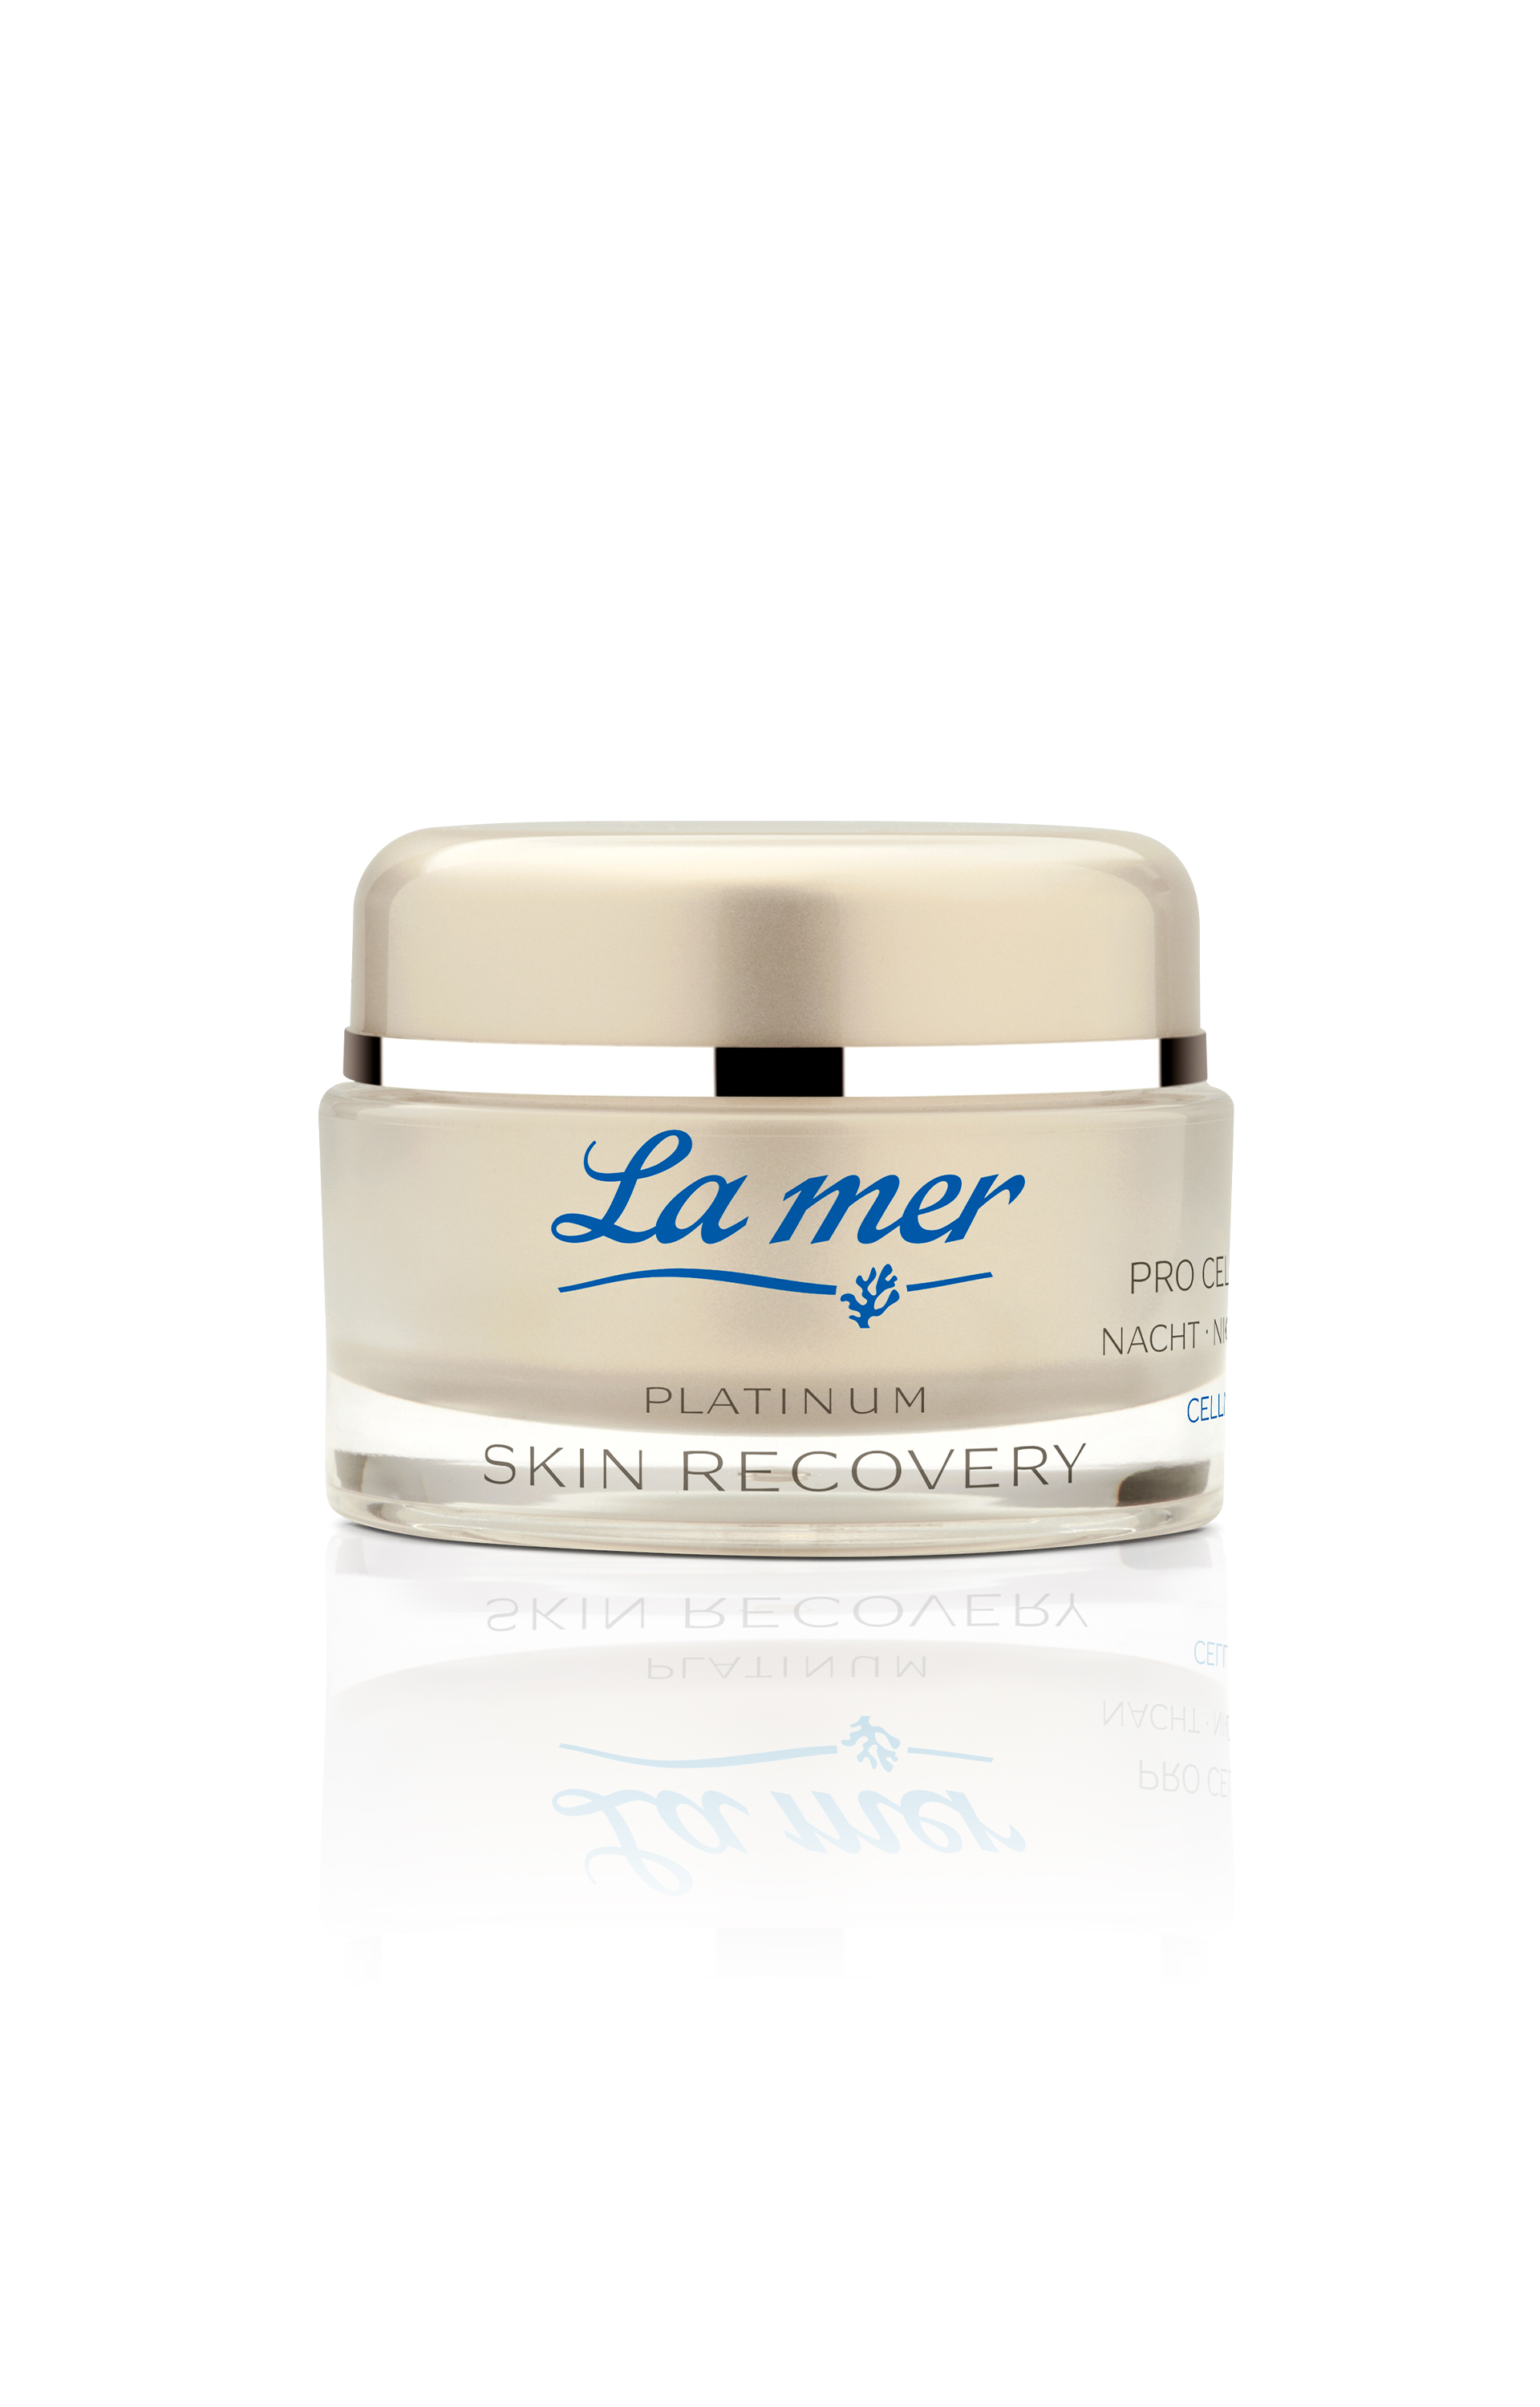 Platinum Skin Recovery Pro Cell Cream Nacht